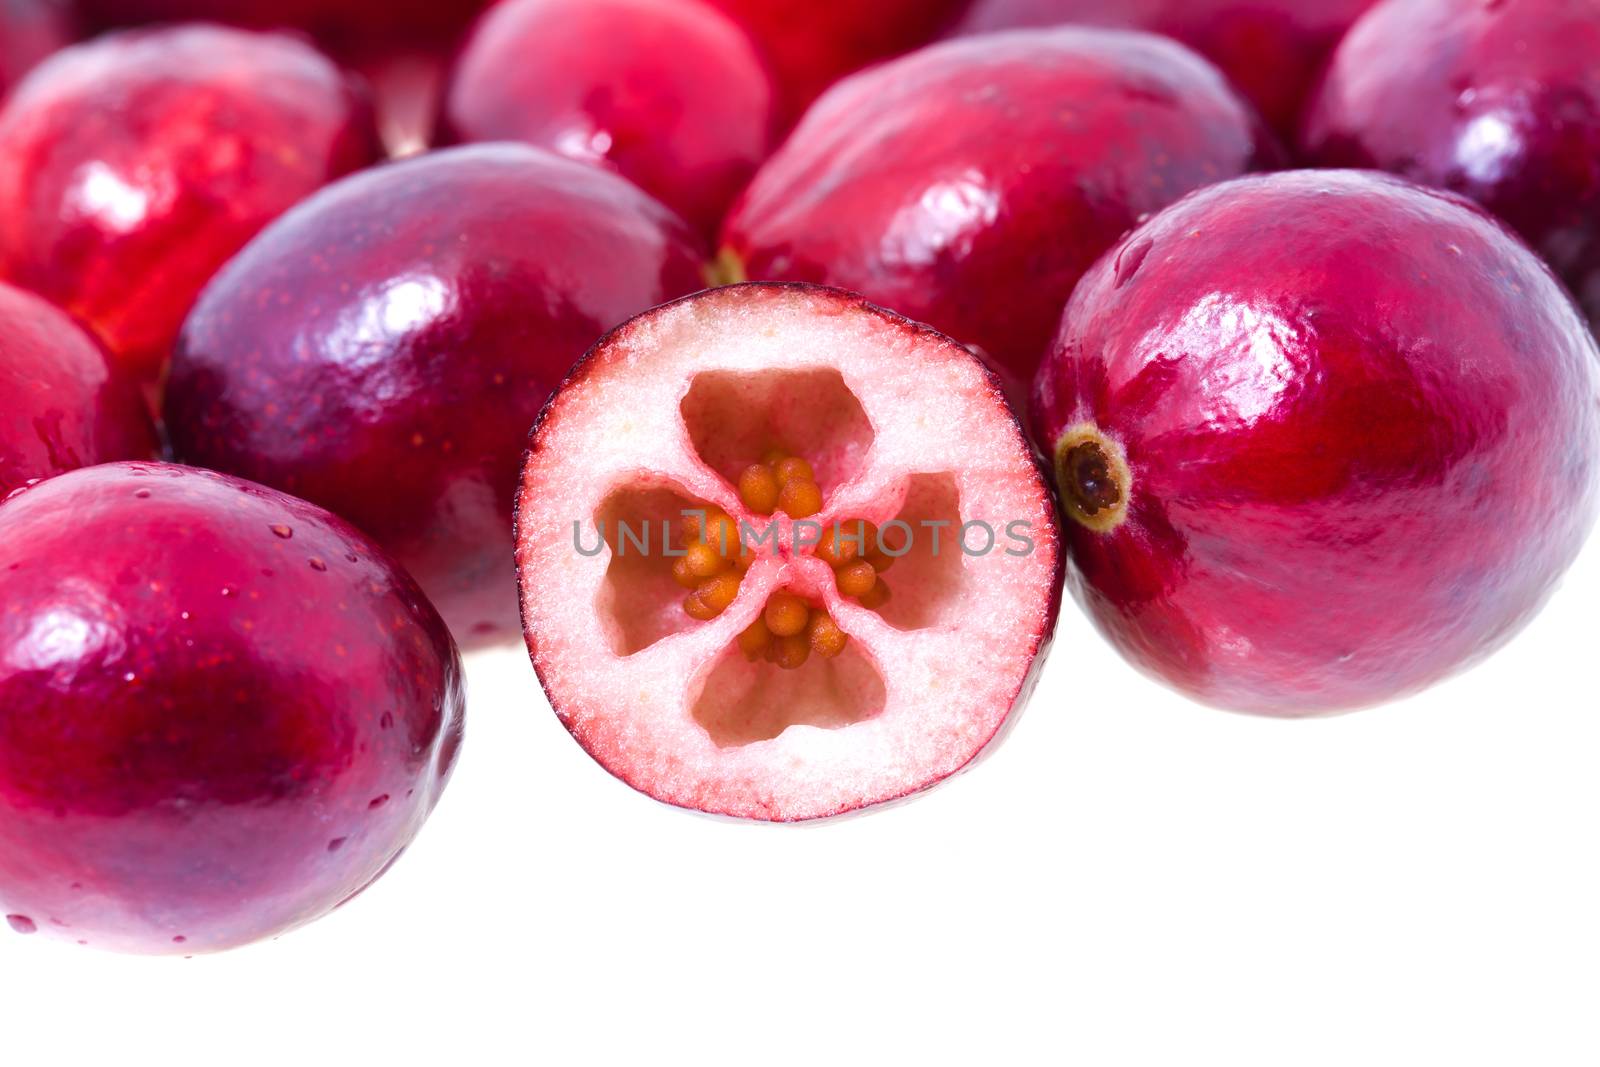   cranberries  by avq